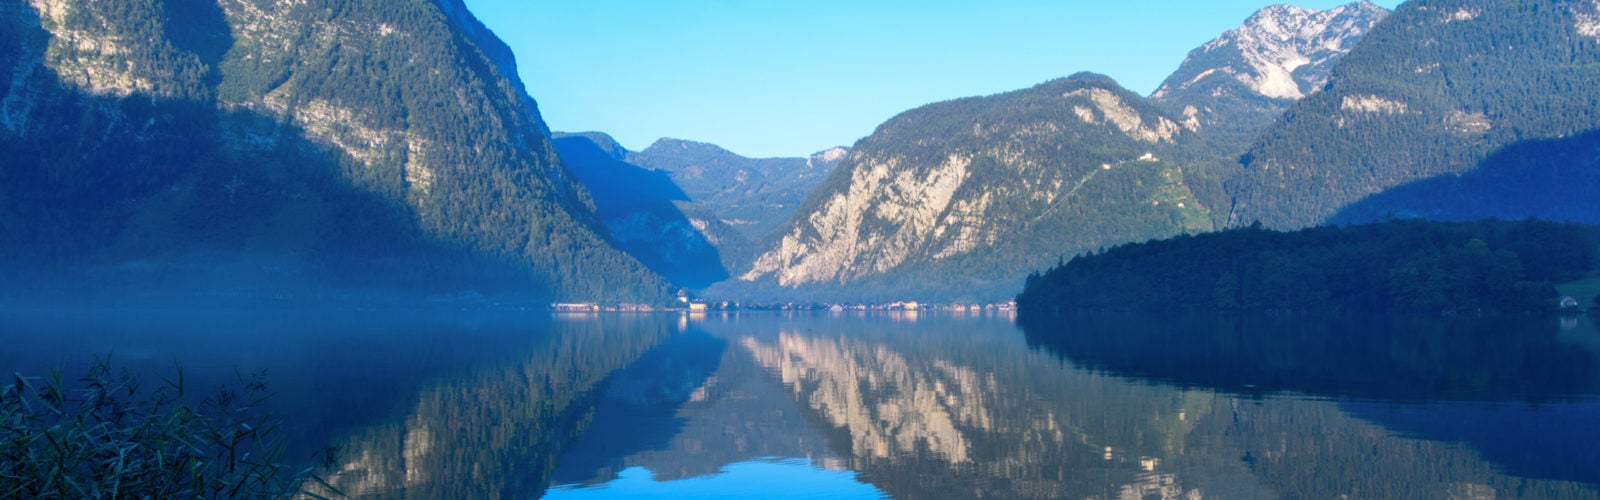 halstatt-lake-reflection-austria